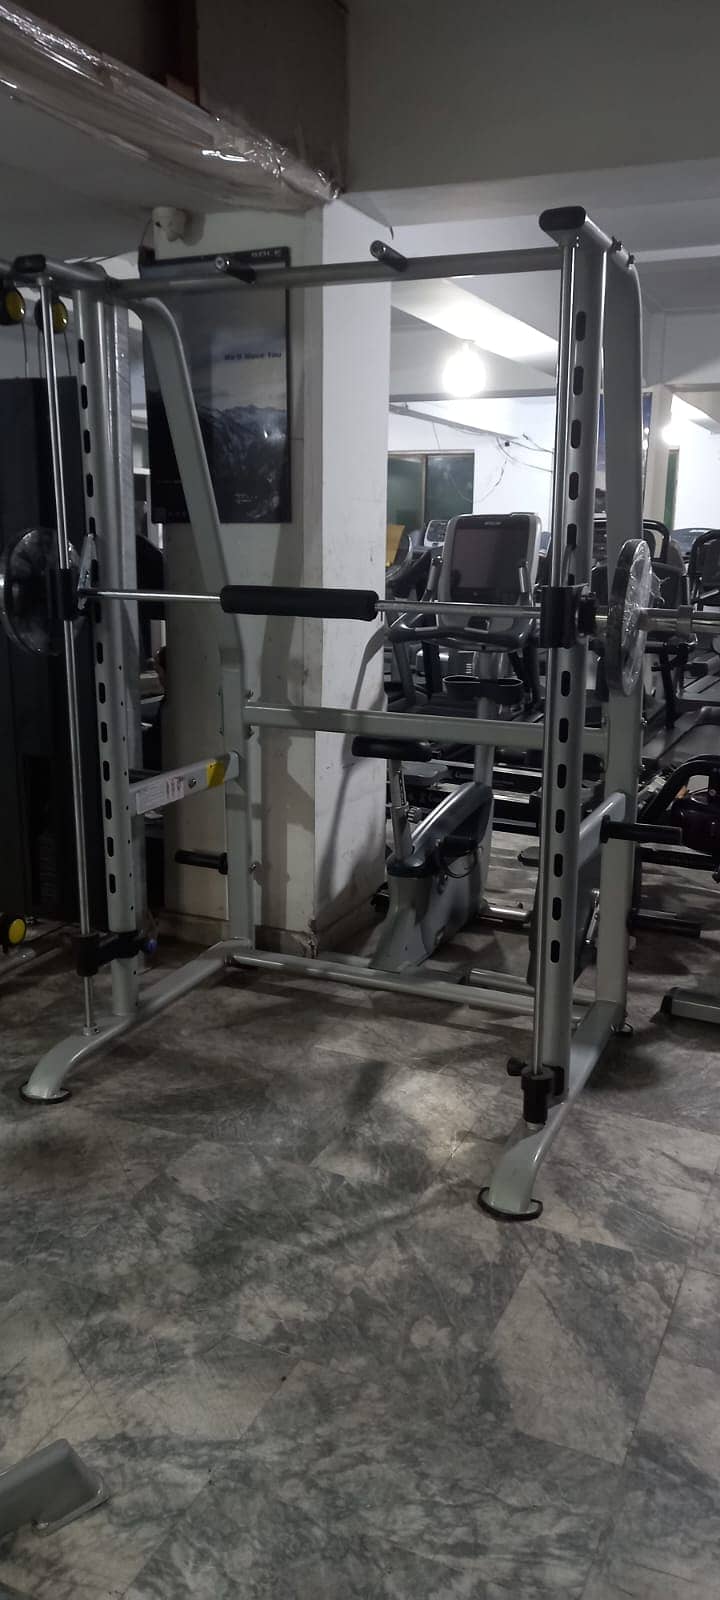 multi functional machine dumbbell gym setup treadmill elliptical plate 3